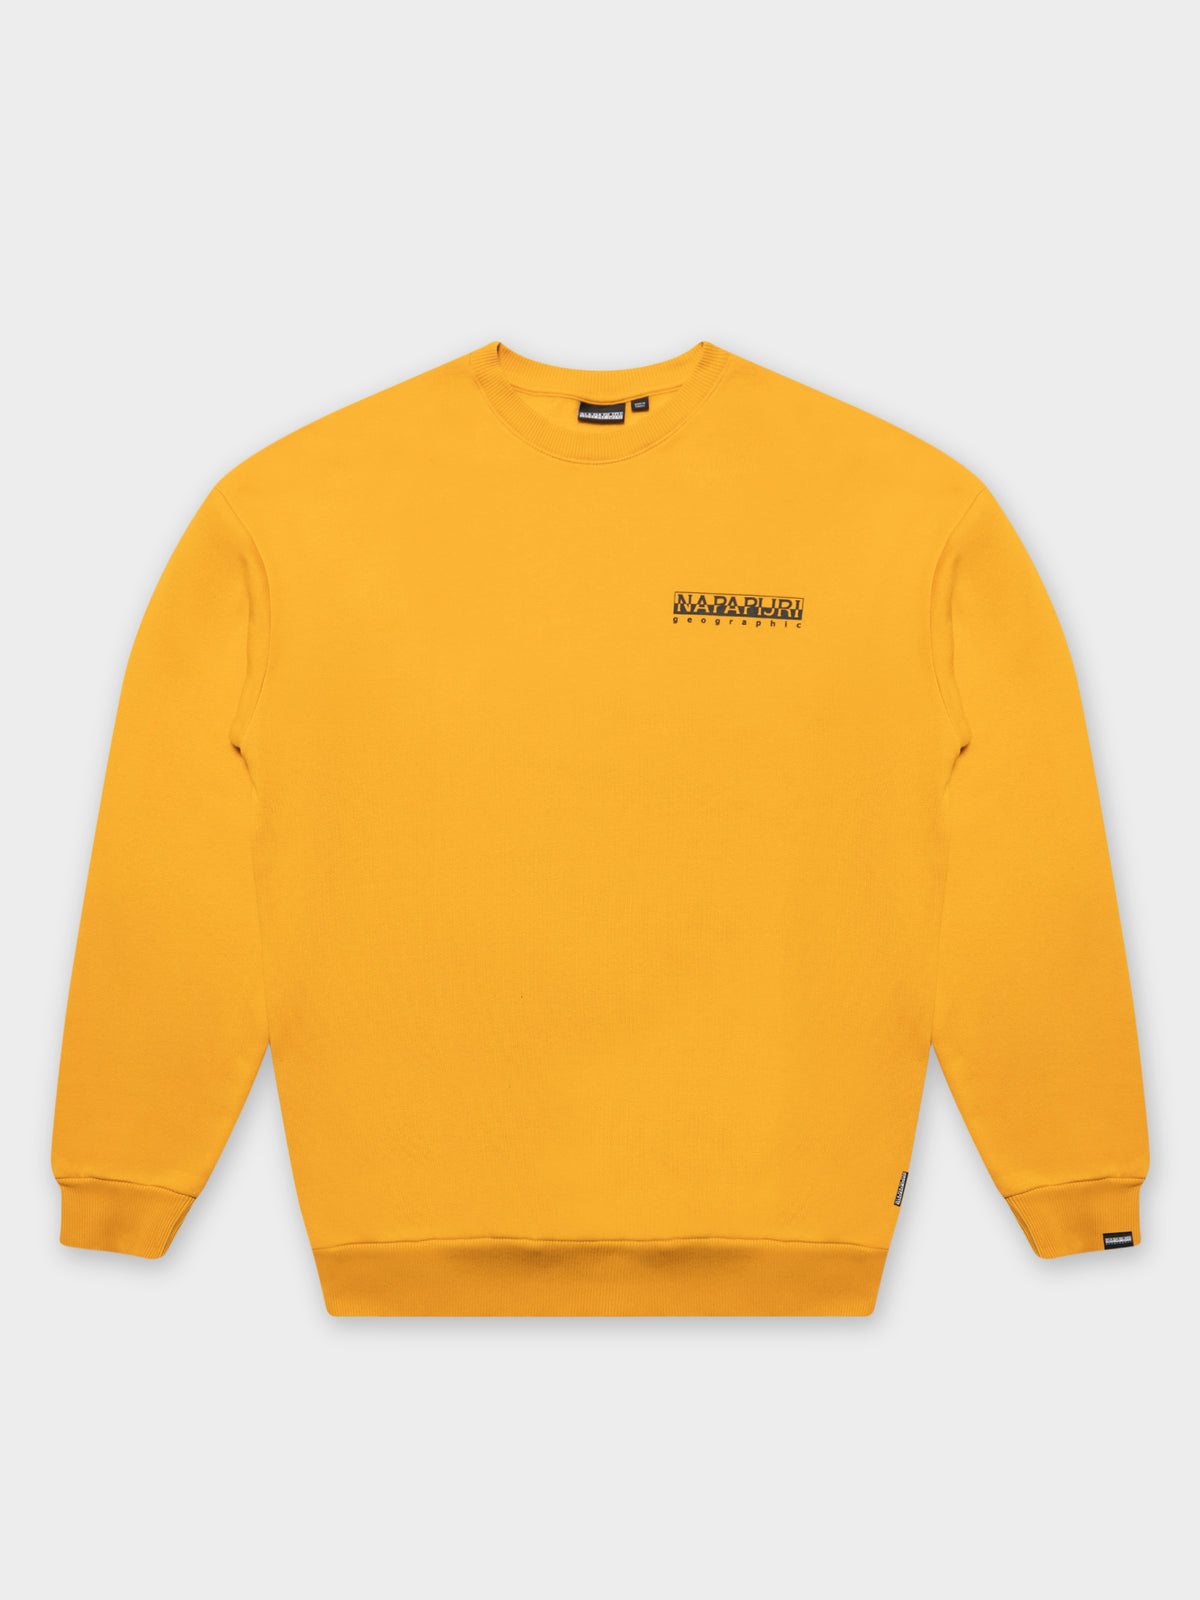 B Yoik C Sweatshirt in Yellow